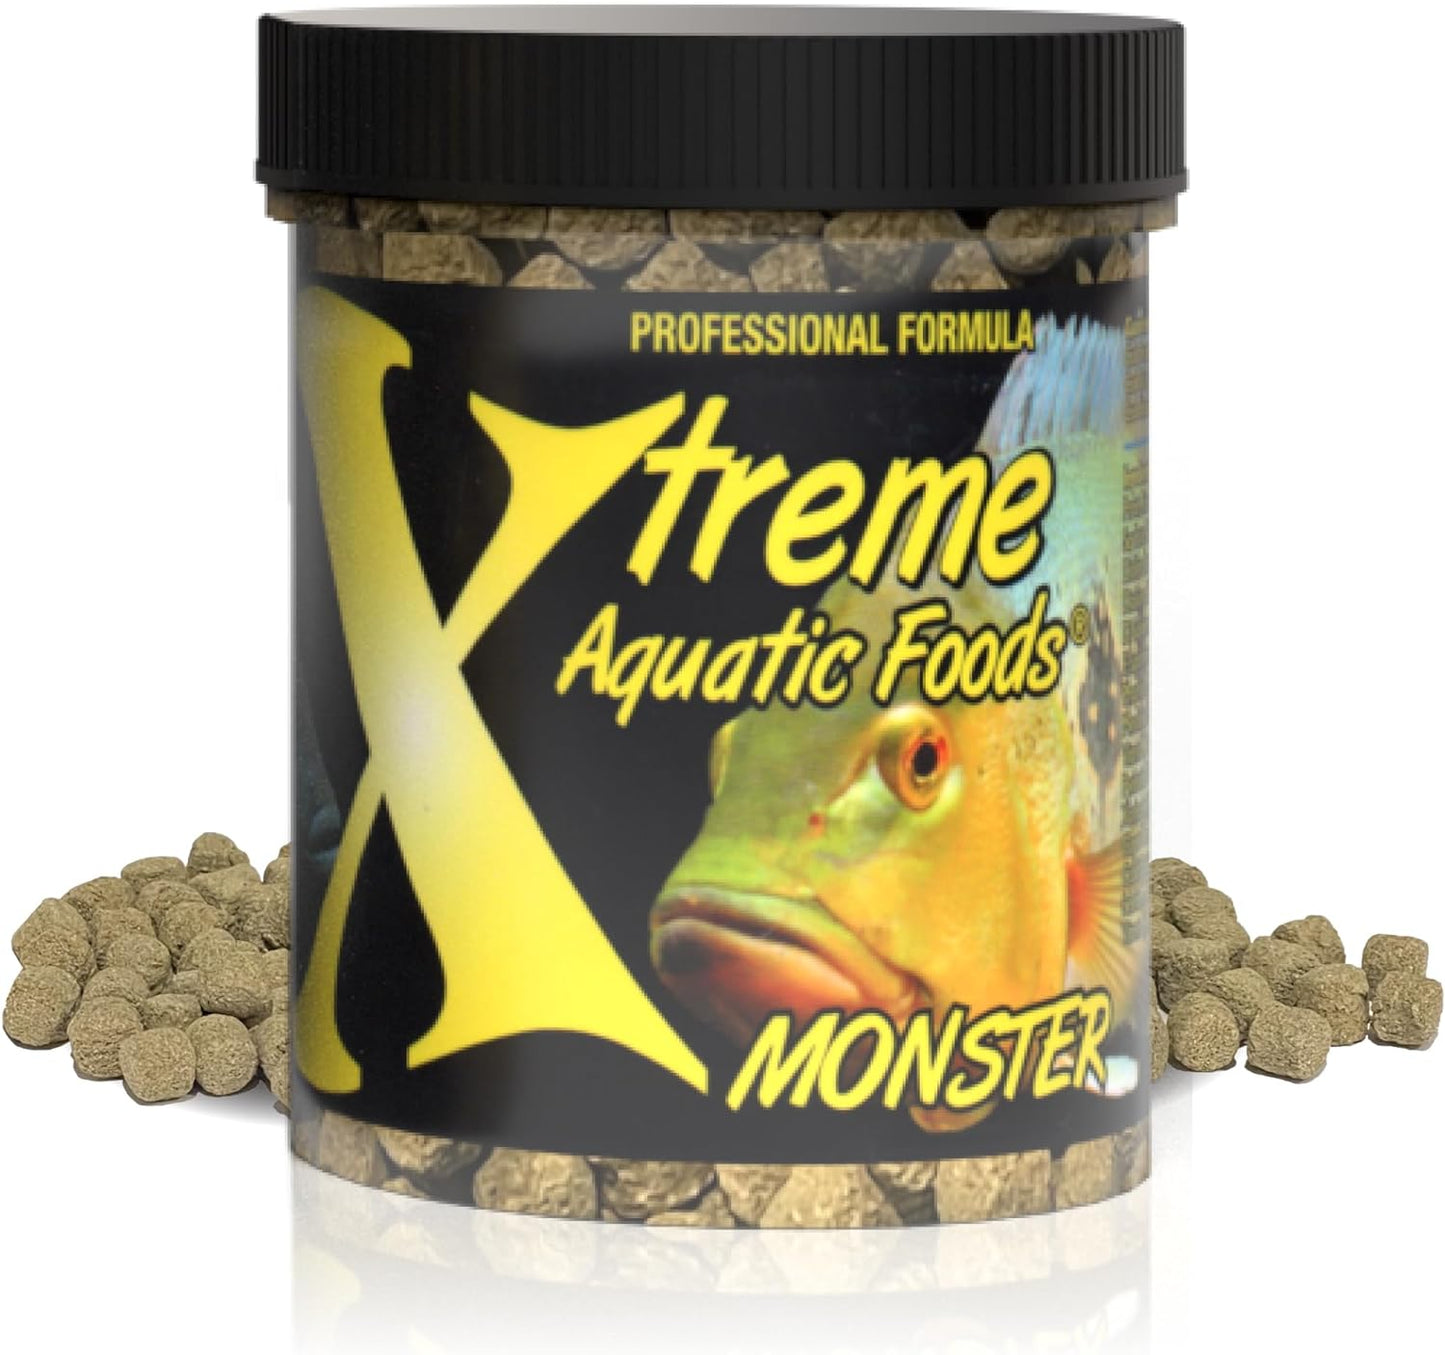 Xtreme Aquatic Foods Monster 9mm Pellets 9 oz (249g) 893427001503 Super Cichlids